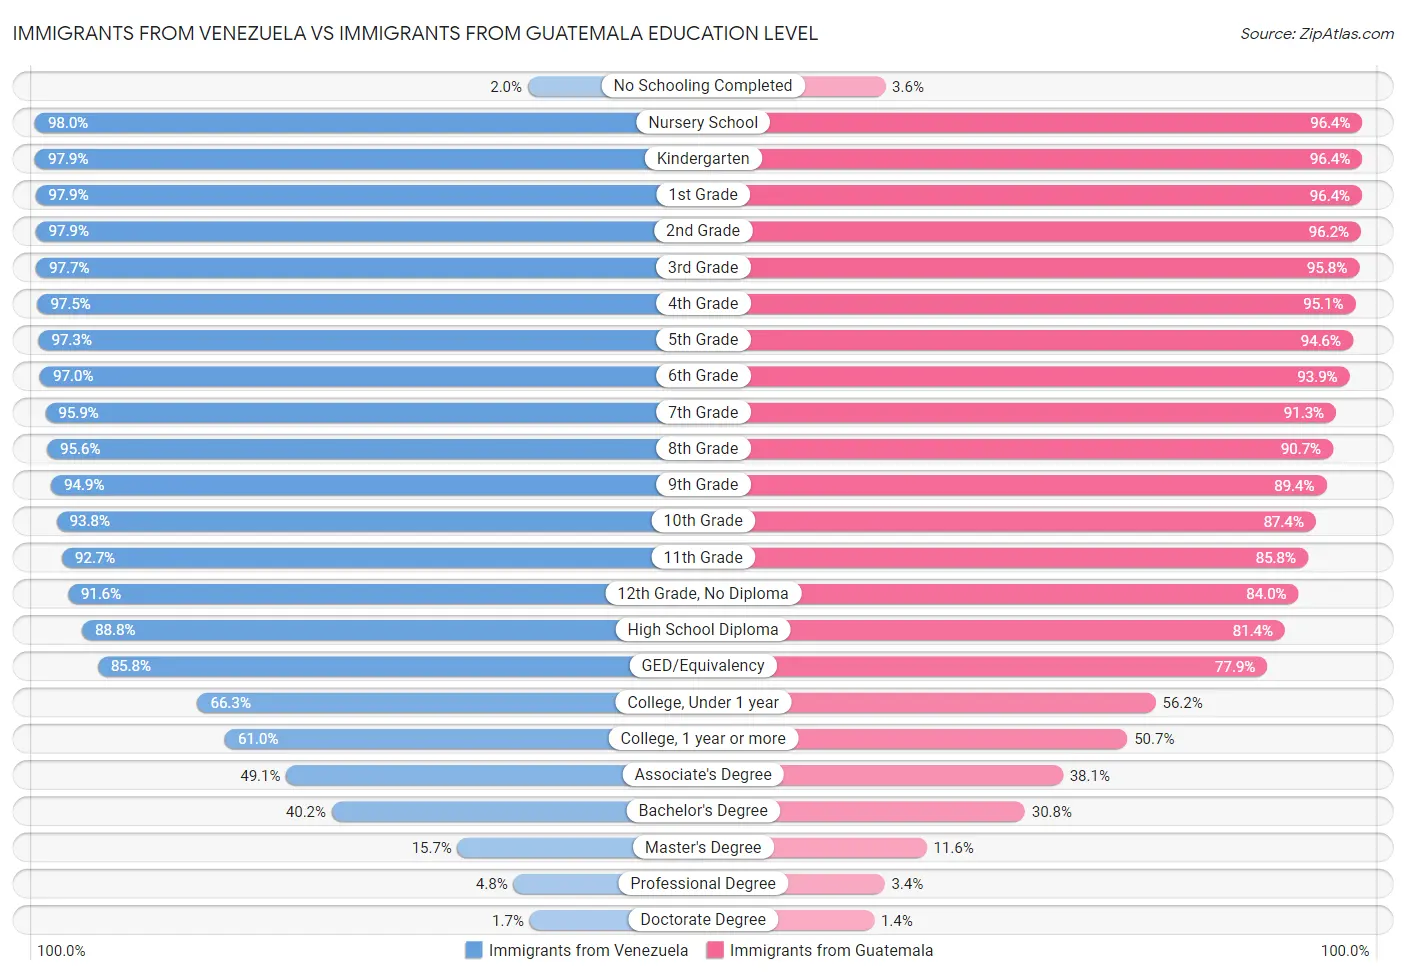 Immigrants from Venezuela vs Immigrants from Guatemala Education Level